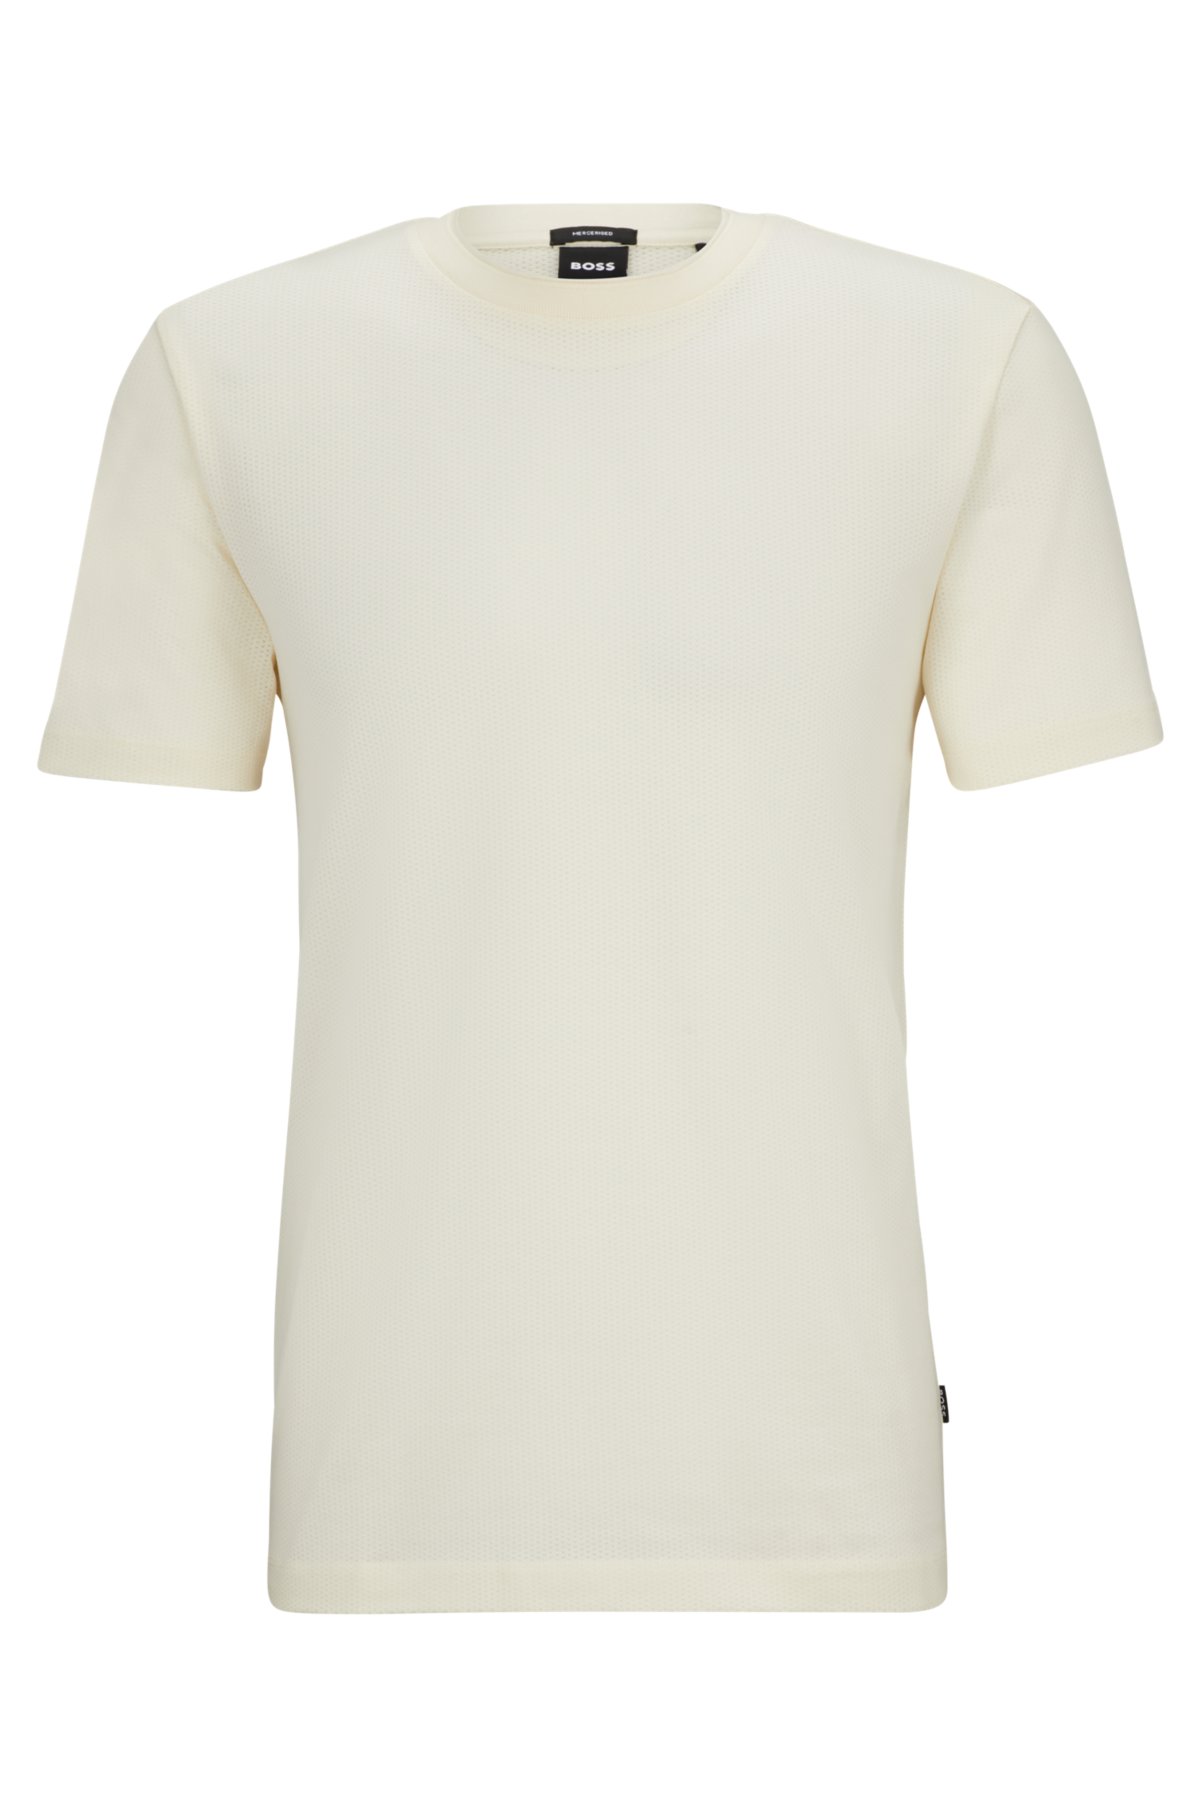 - BOSS a blend mercerized-cotton T-shirt Mesh-structure in